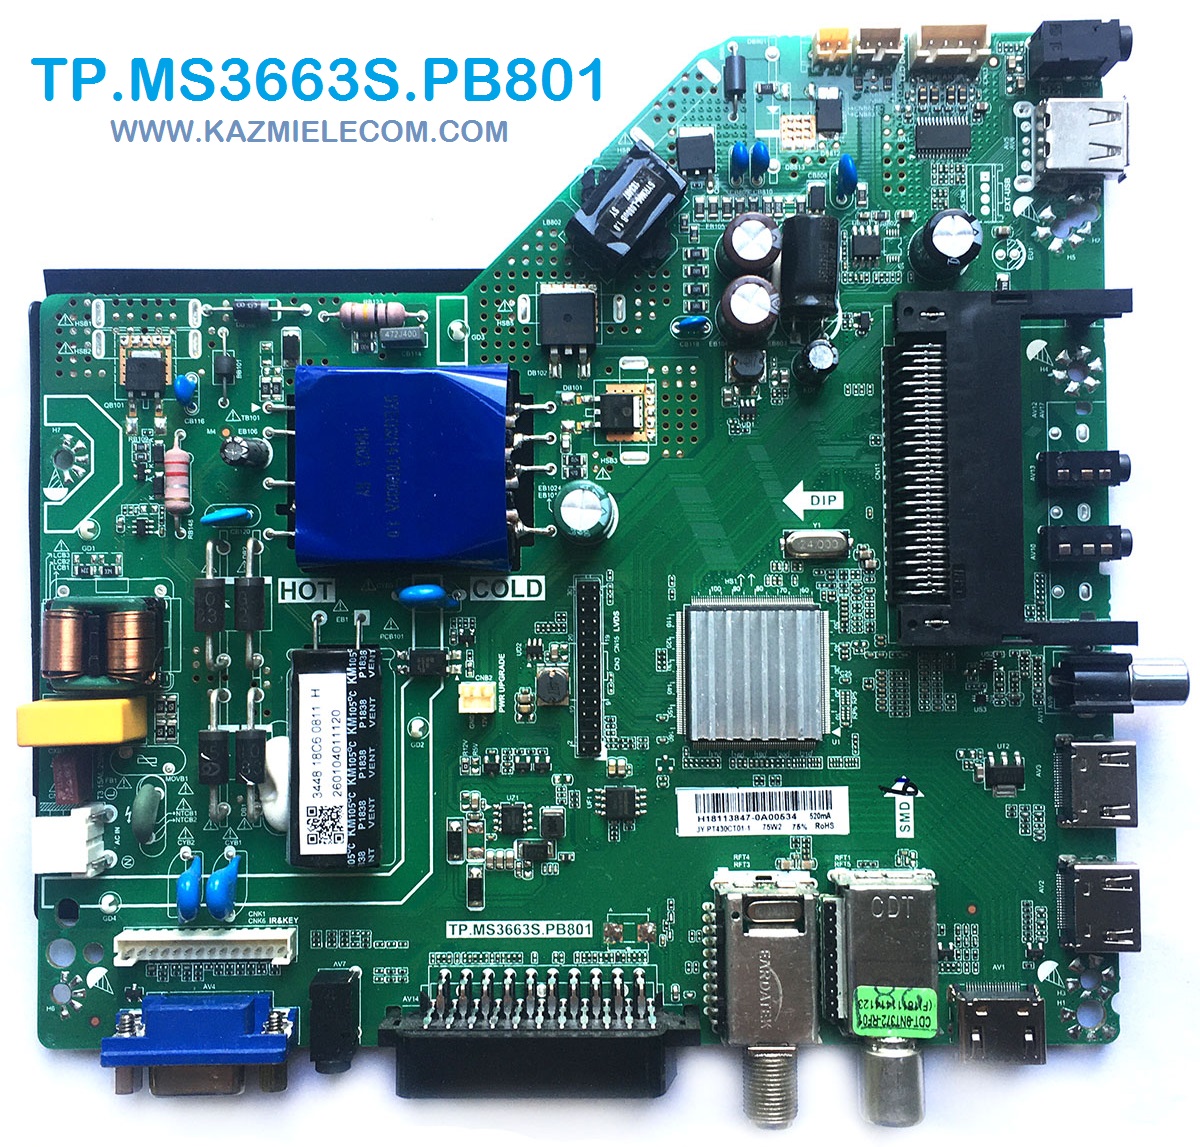 TP.MS3663S.PB801_FIRMWARE